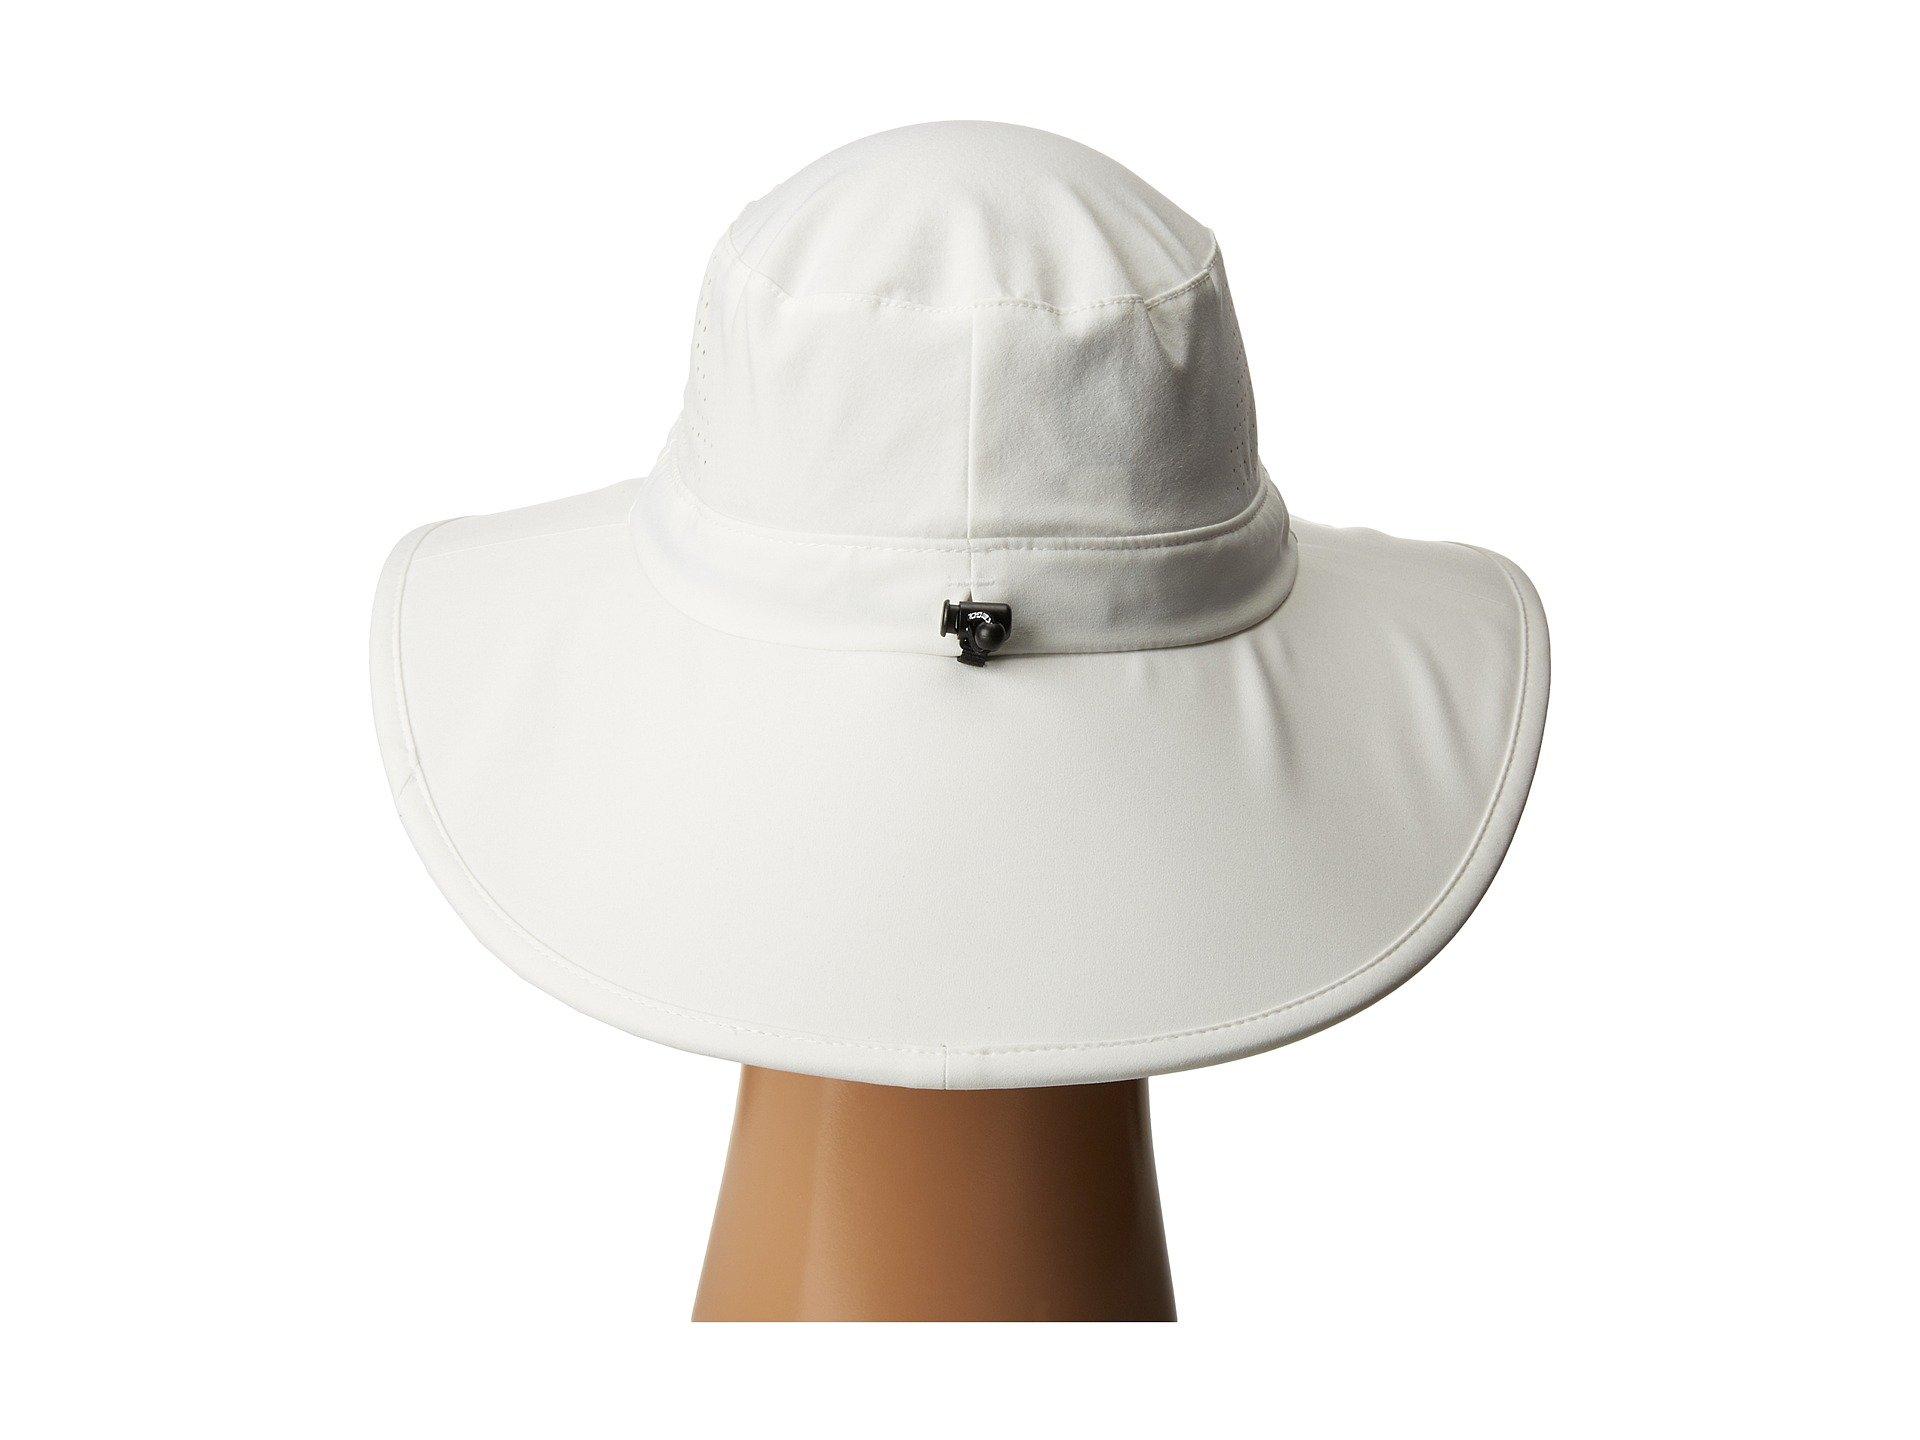 nike sun protect hat 2.0